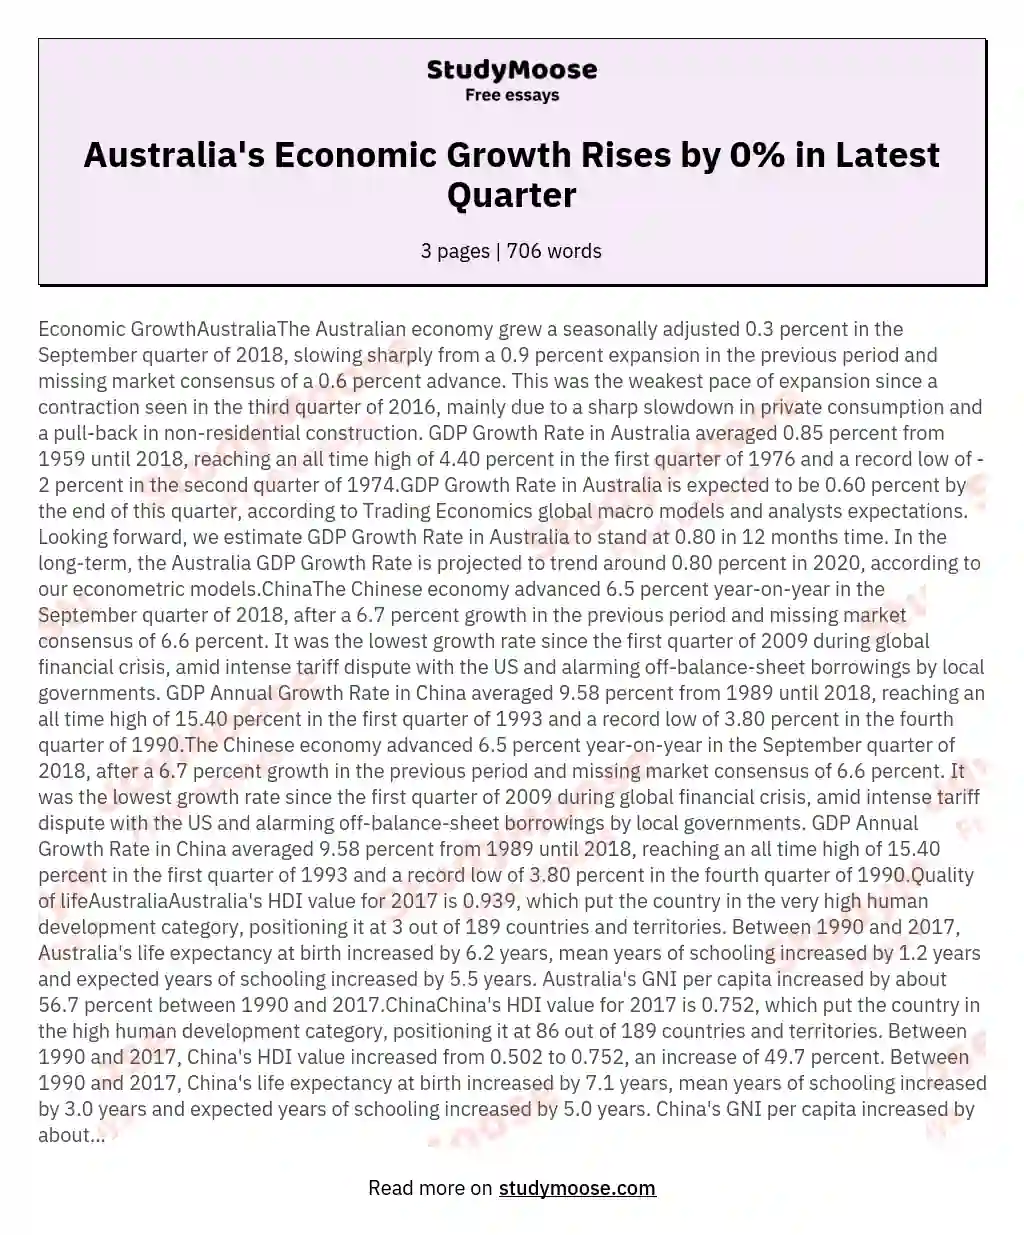 Australia's Economic Growth Rises by 0% in Latest Quarter essay